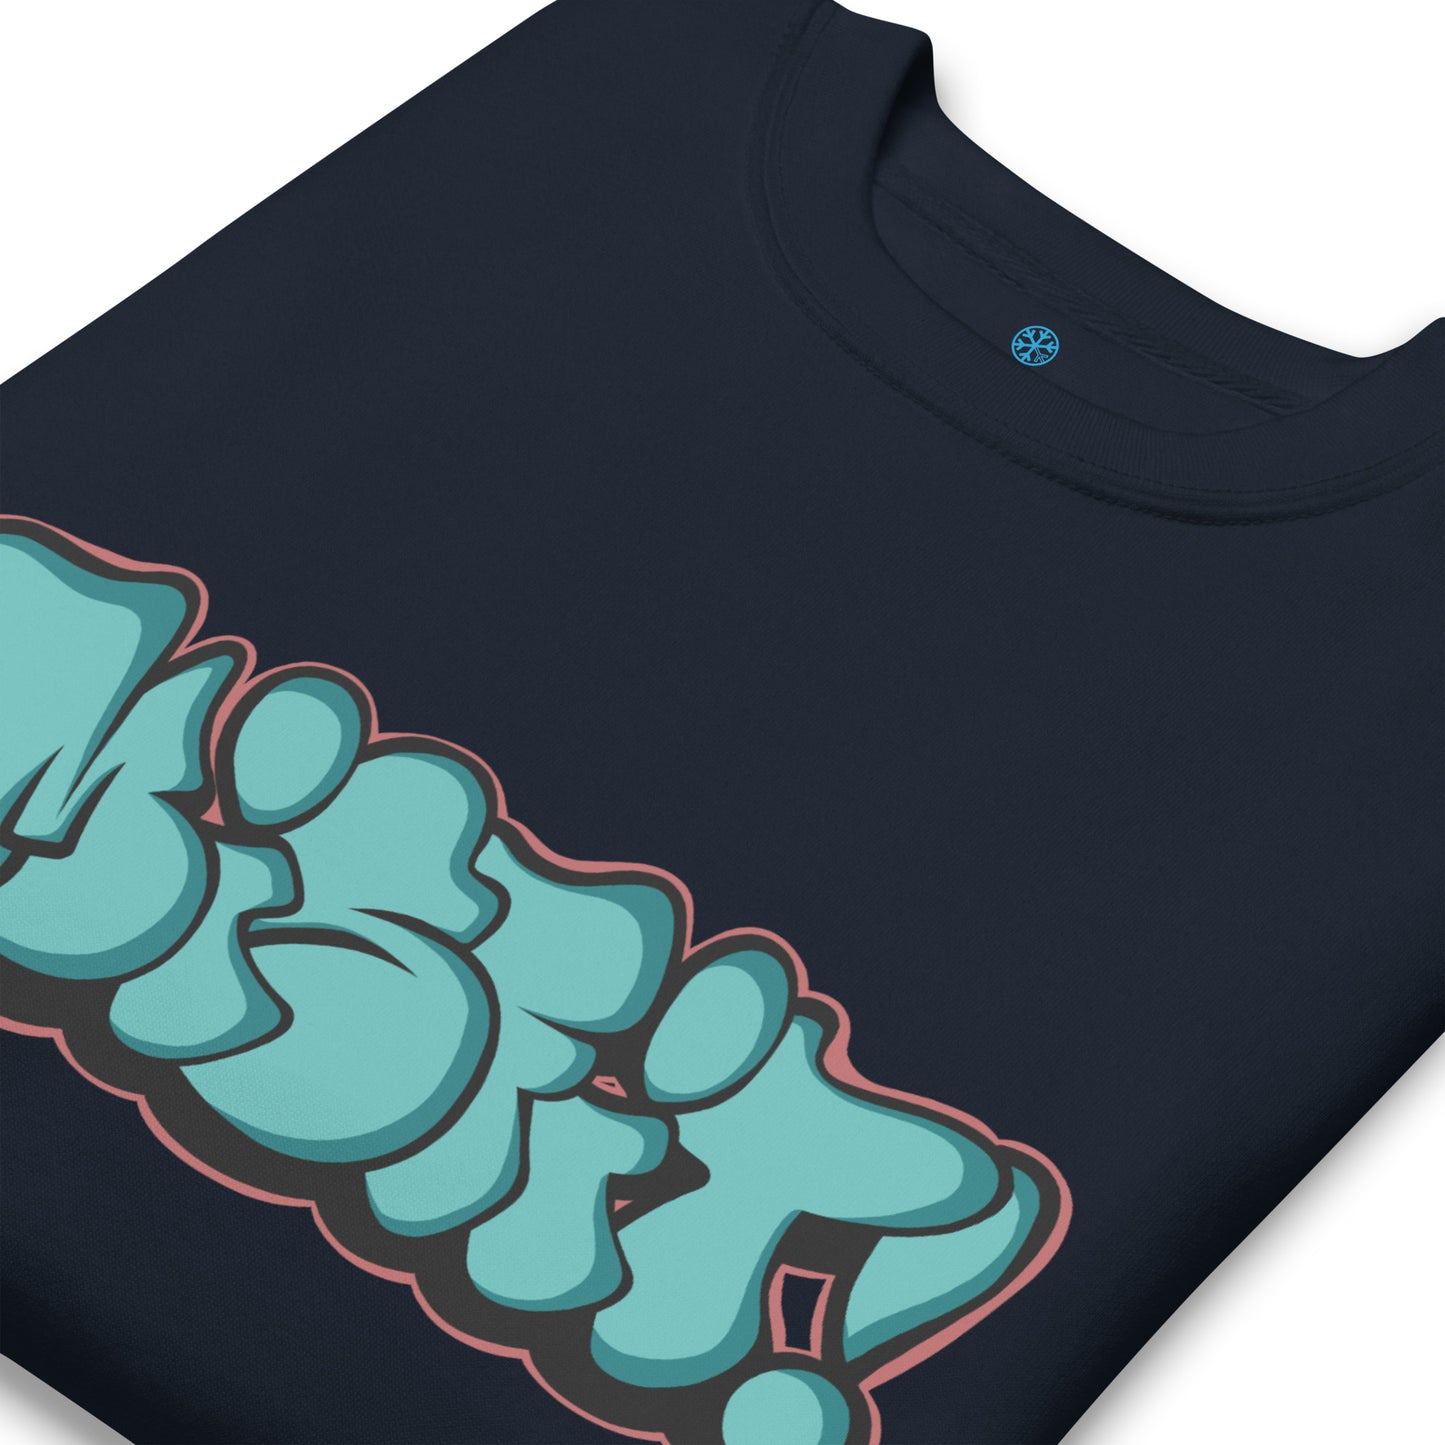 detail of Misfit throwie sweatshirt by B.Different Clothing street art graffiti inspired streetwear brand